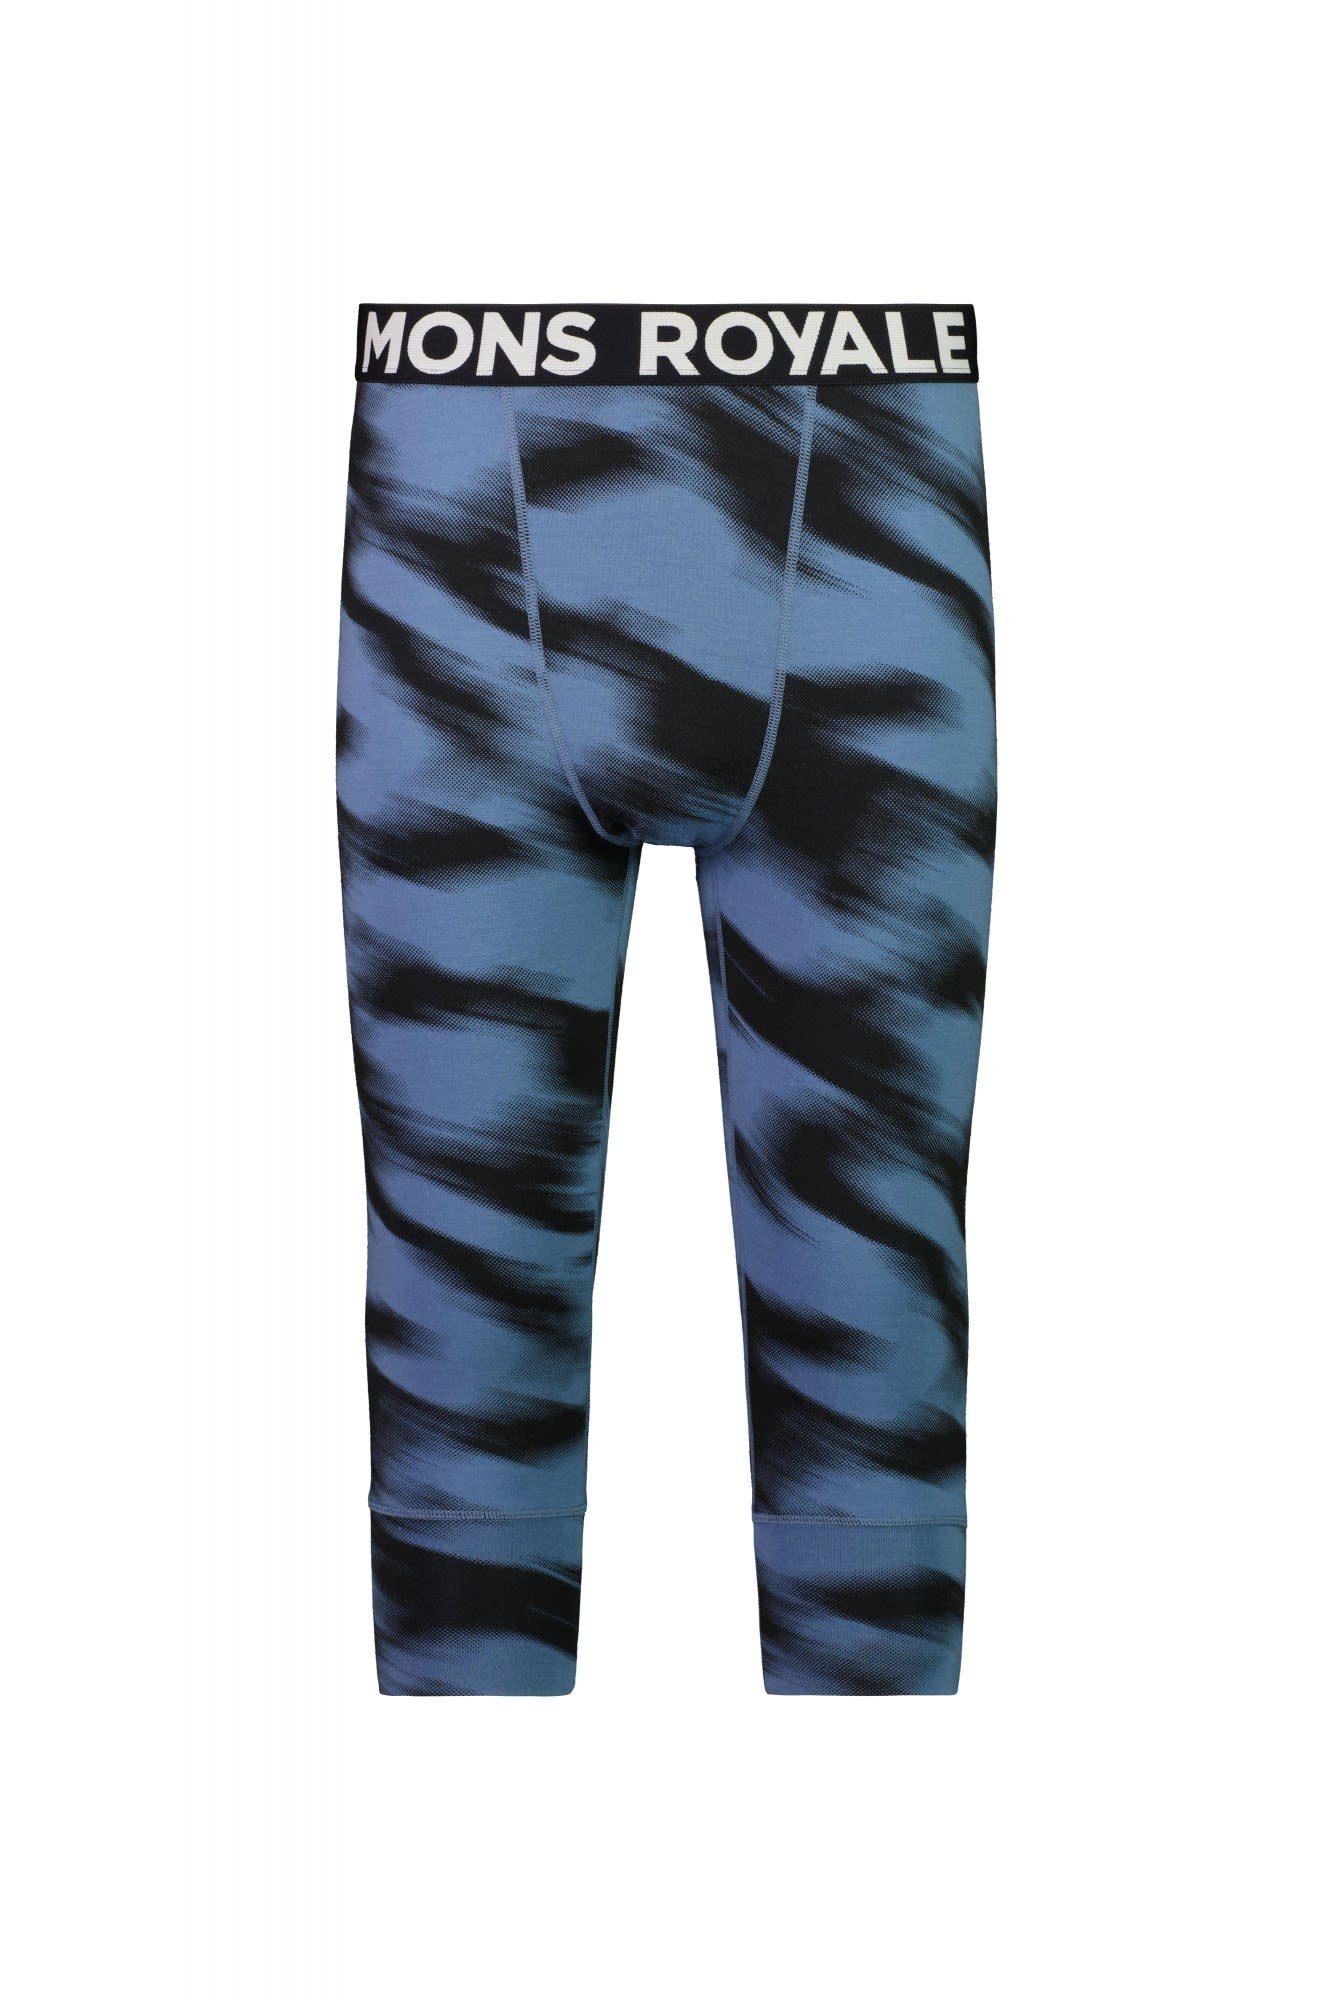 Print Herren Unterhose Legging Cascade Mons M Royale 3/4 Mons Motion Lange Royale Blue